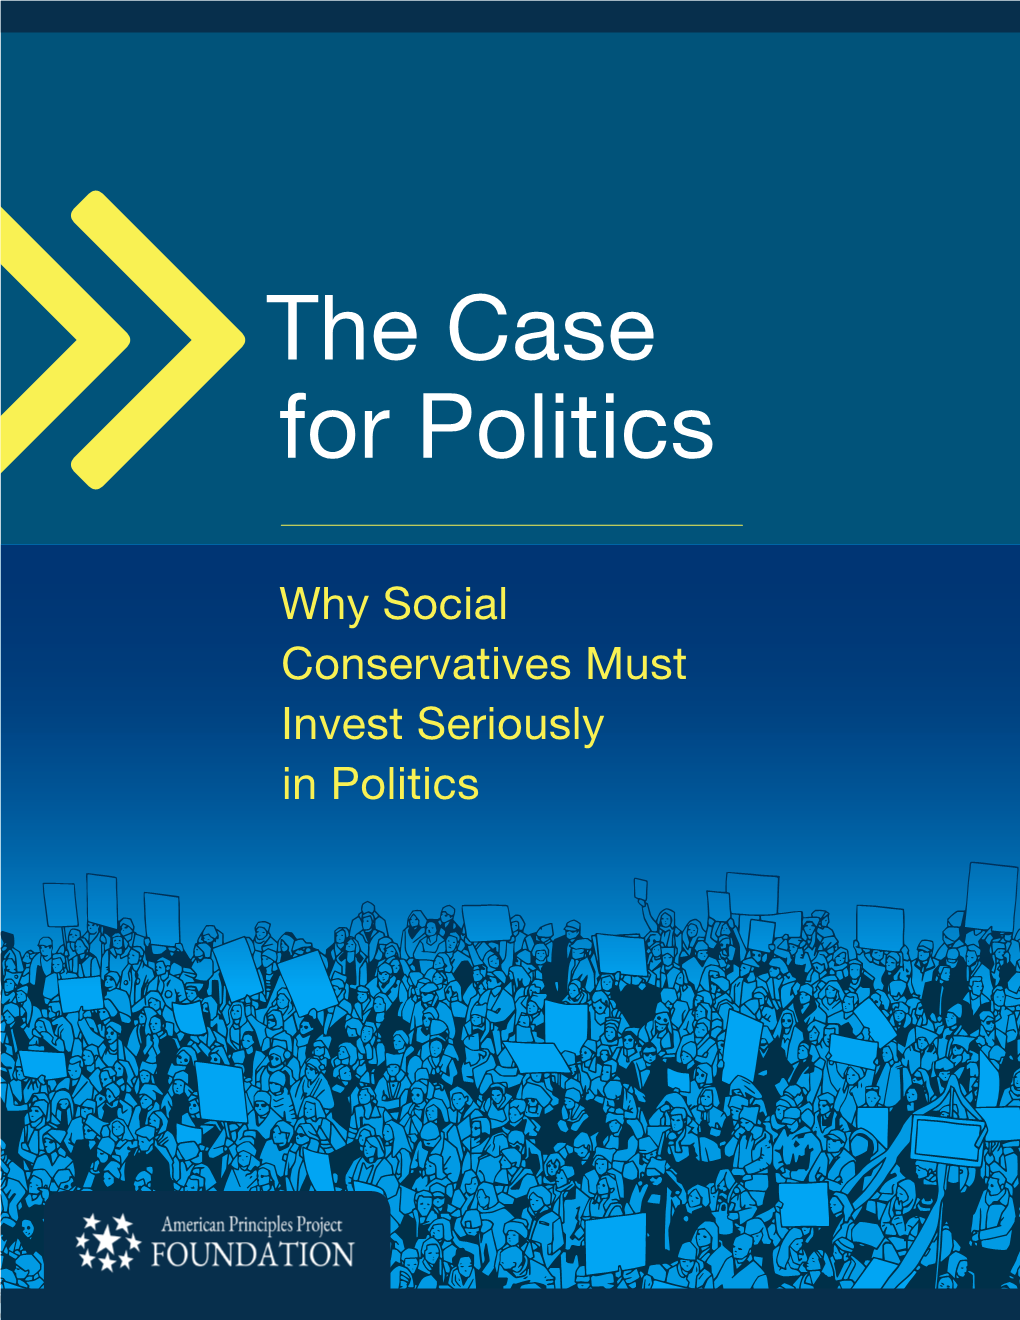 The Case for Politics